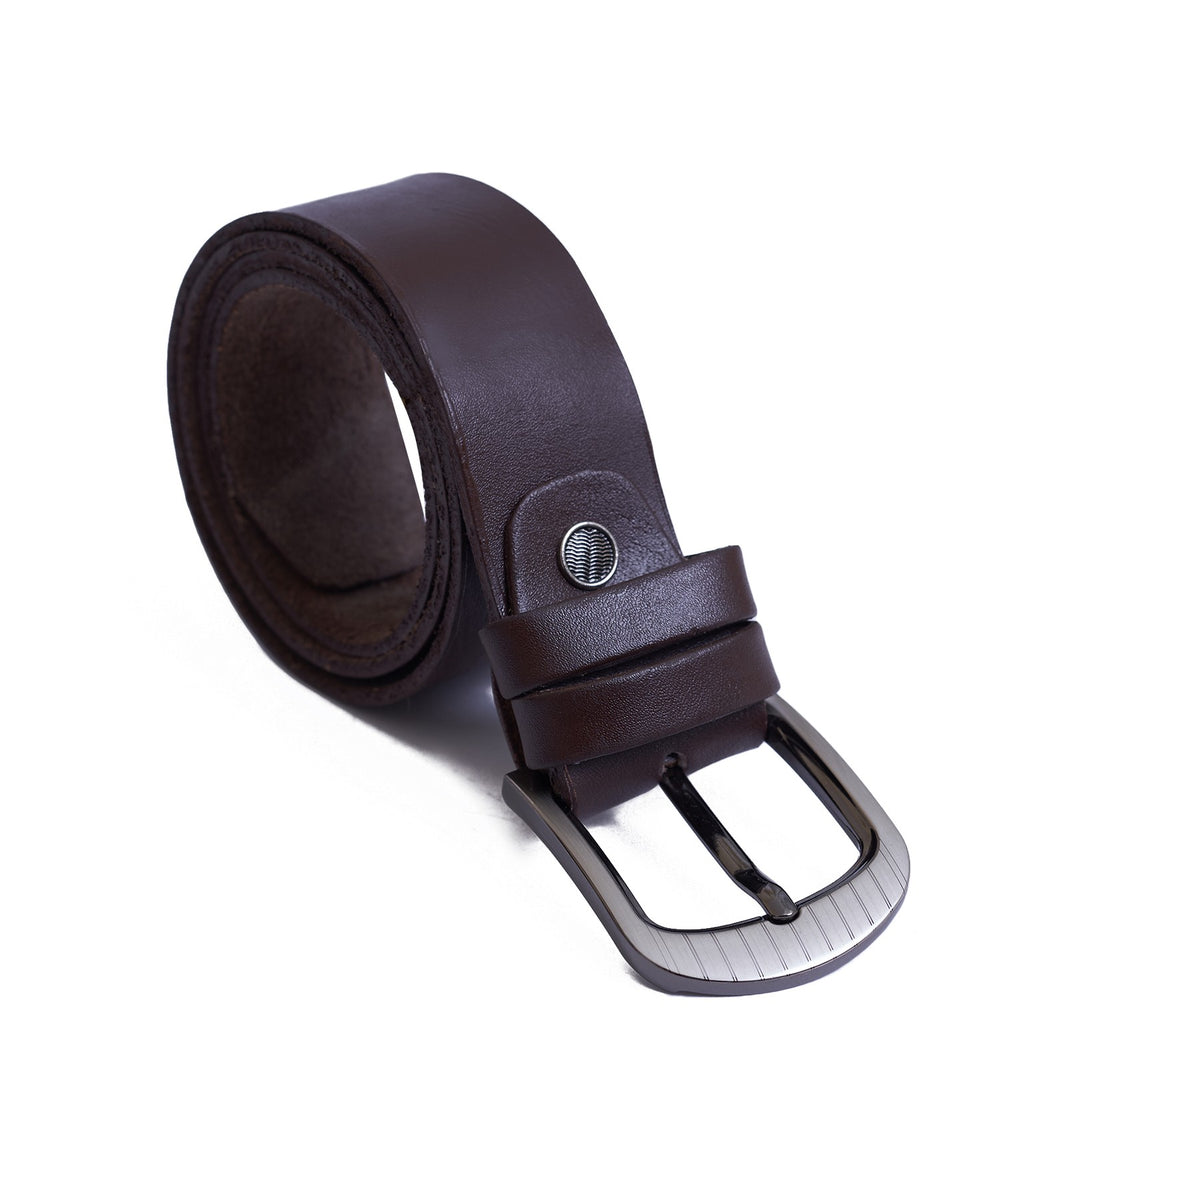 4 CM Genuine leather Belt - lux - Brown Color Model B5402